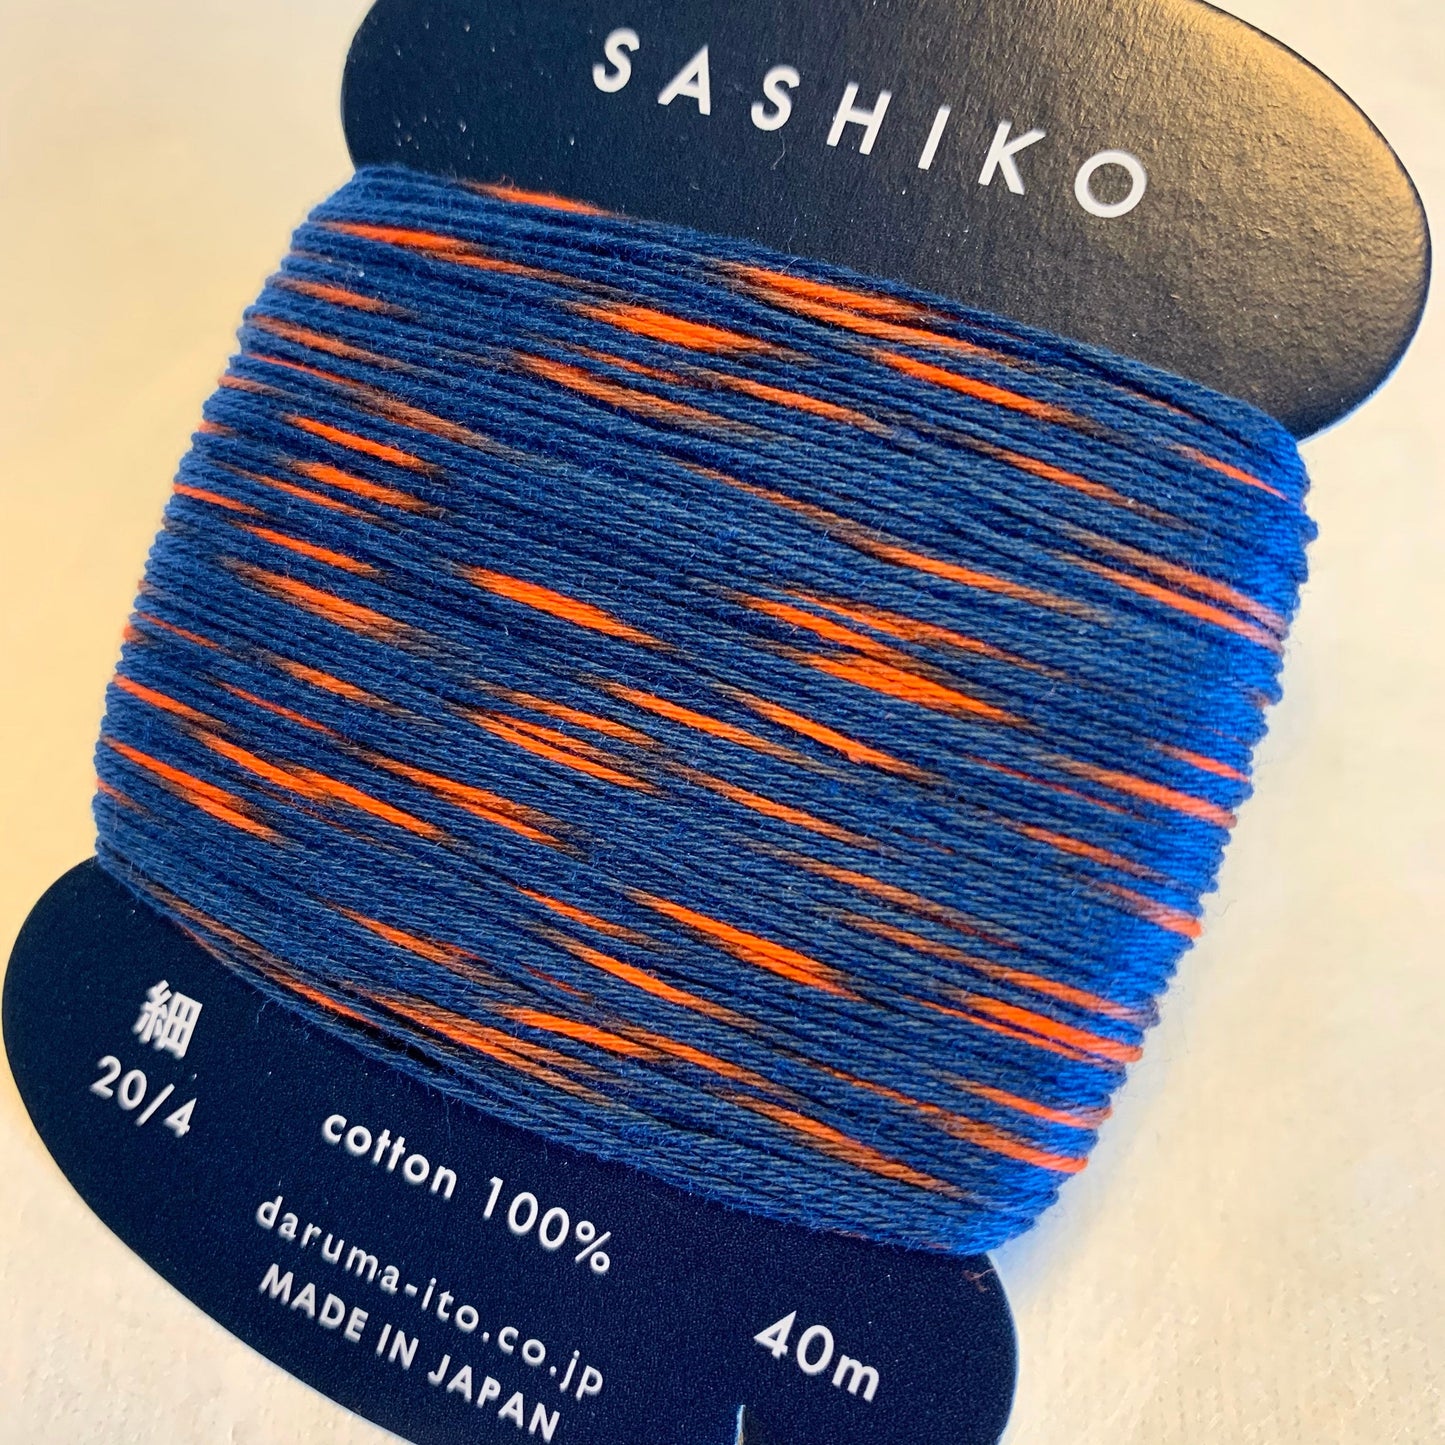 Daruma #302 "SPARKLER" variegated navy blue and flame red Japanese Cotton SASHIKO thread 40 meter skein 20/4